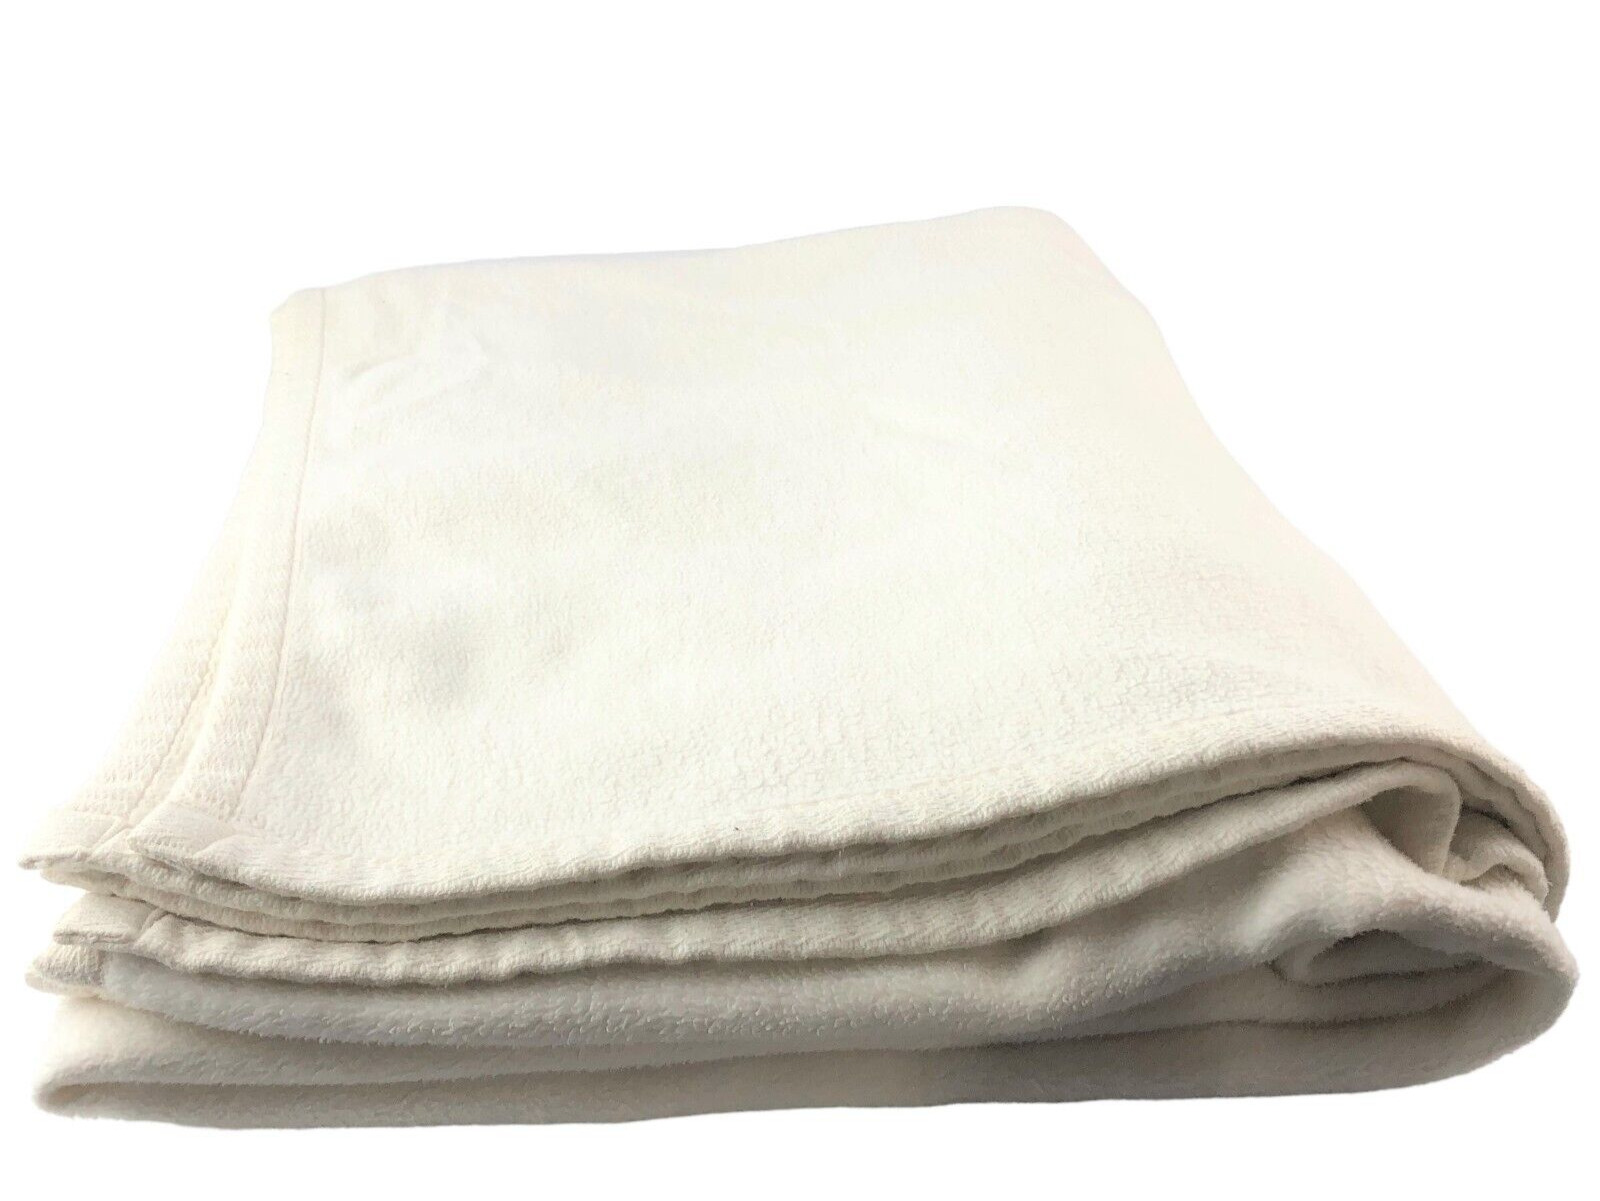 Vtg Cotton Blend Soft Fuzzy Blanket Tan Off White 90x75 No stains